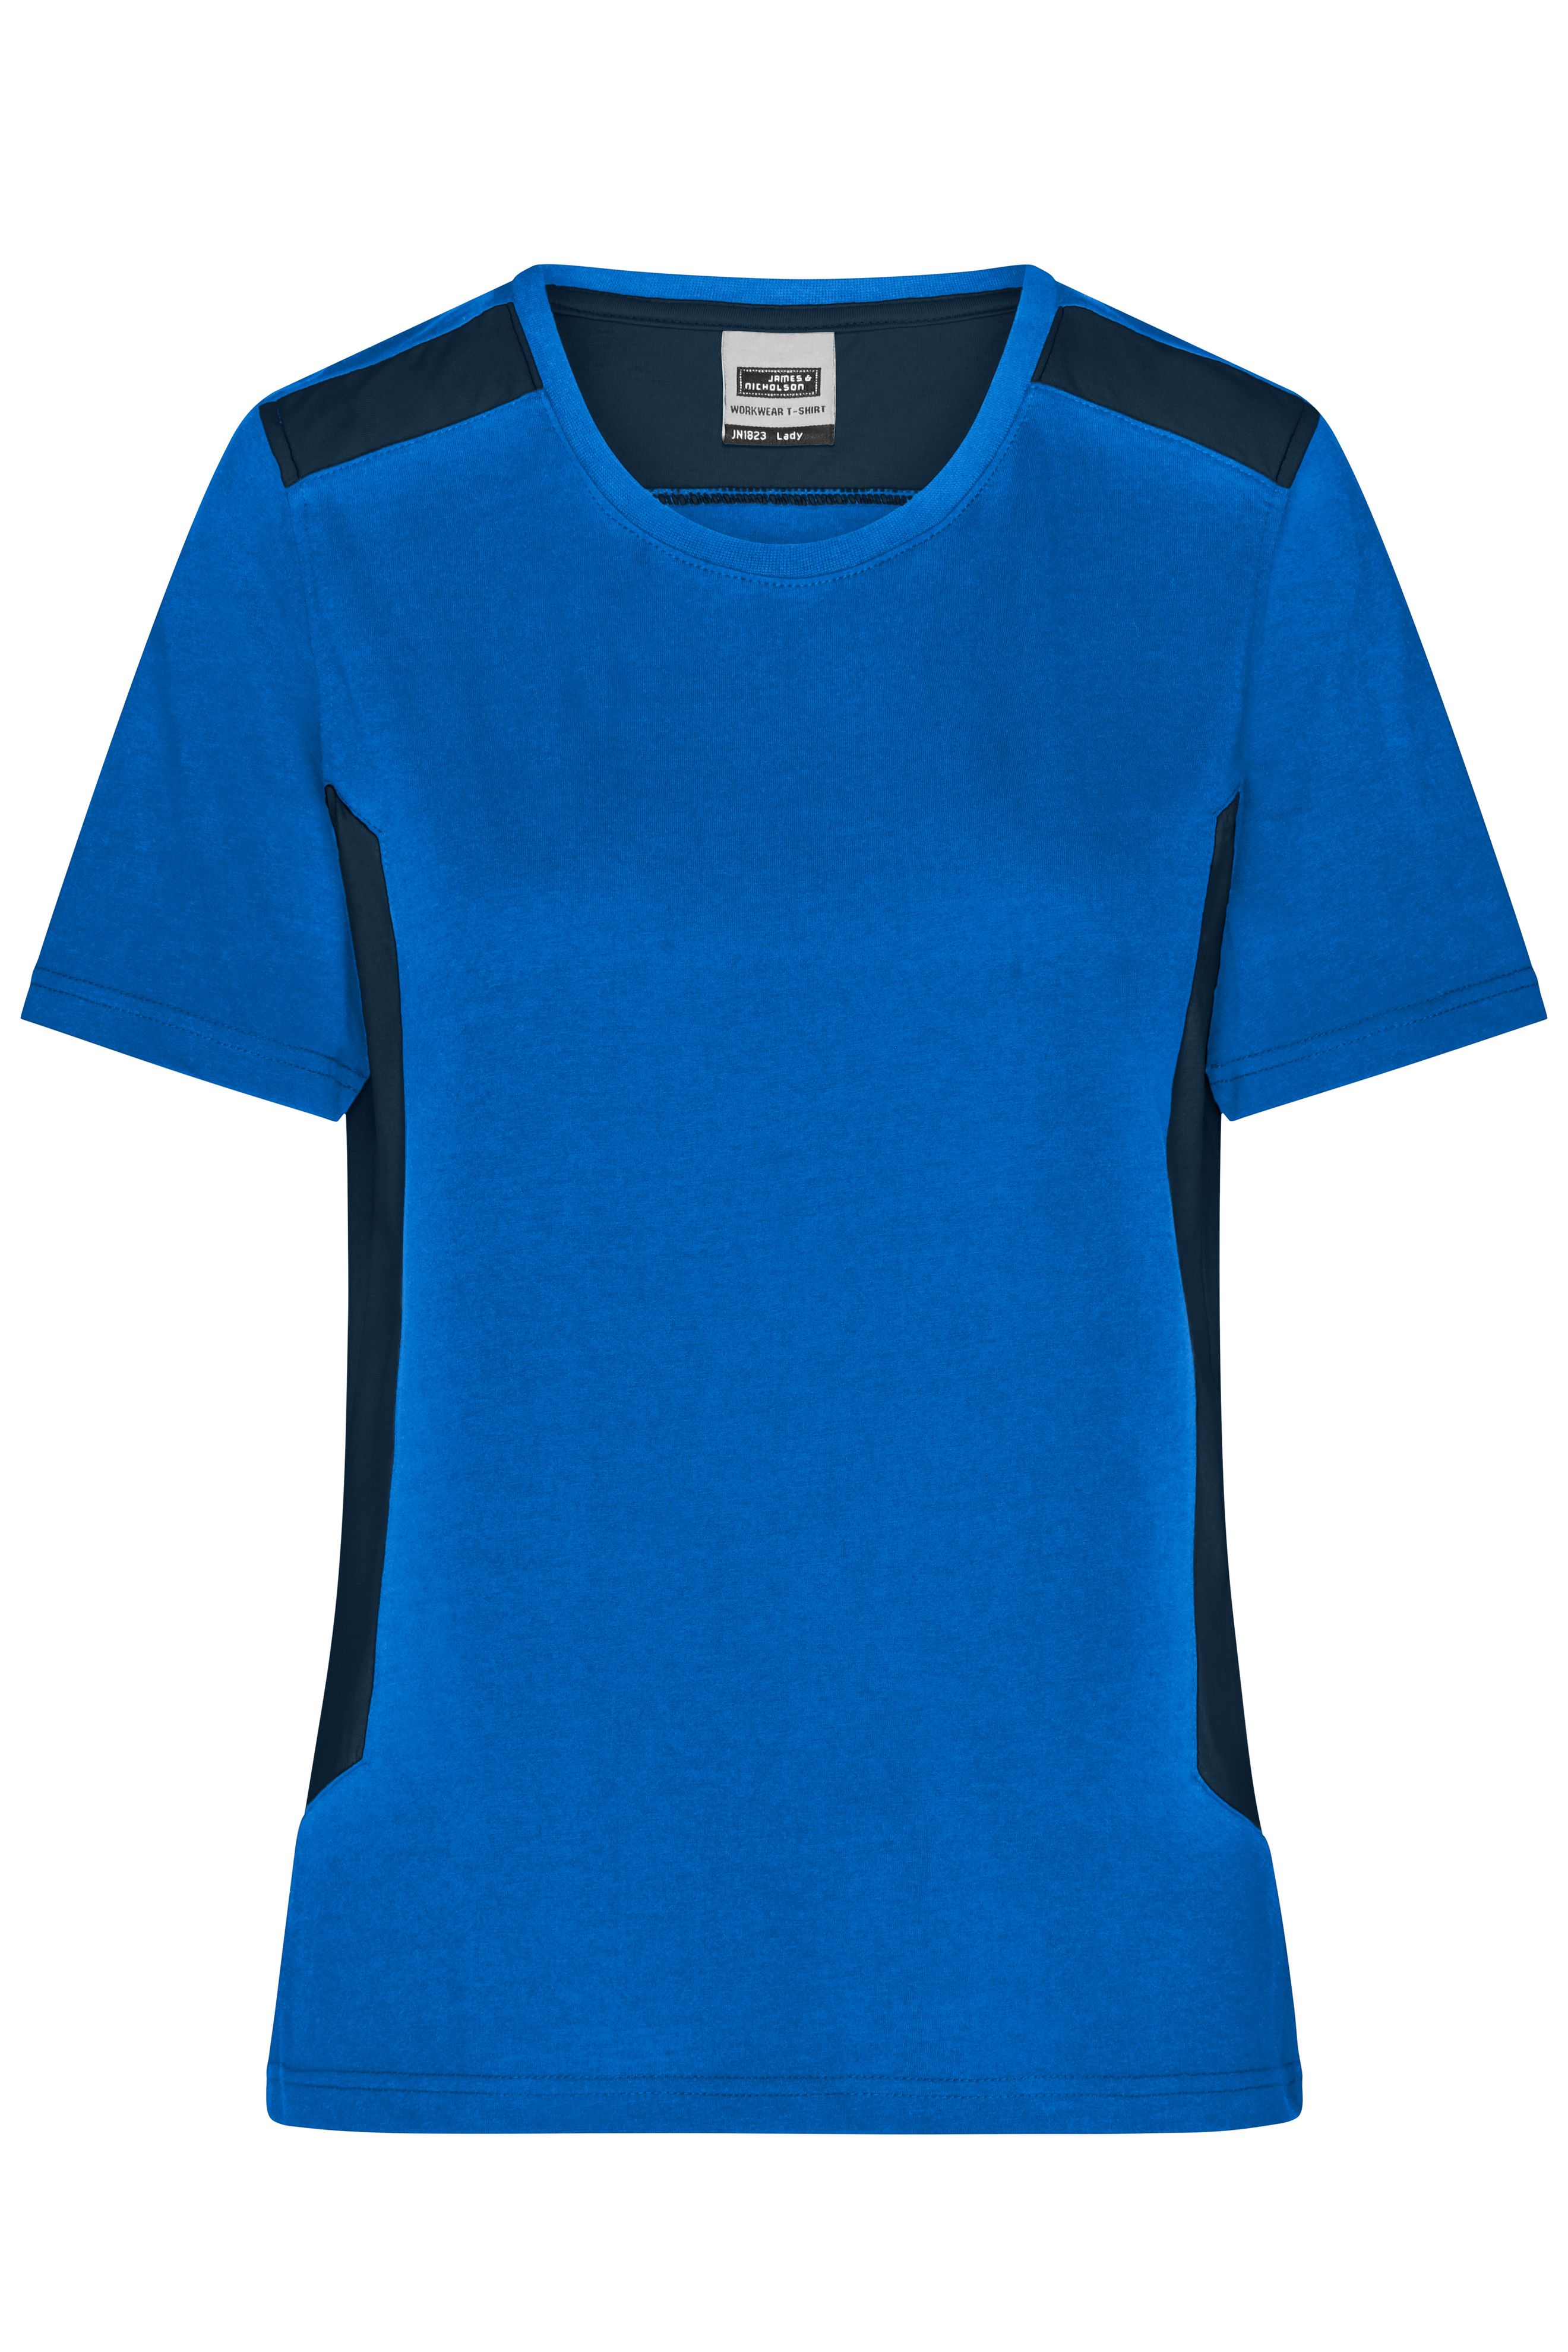 Ladies Ladies' Workwear T-shirt - STRONG - Royal/navy-Workweartextilien